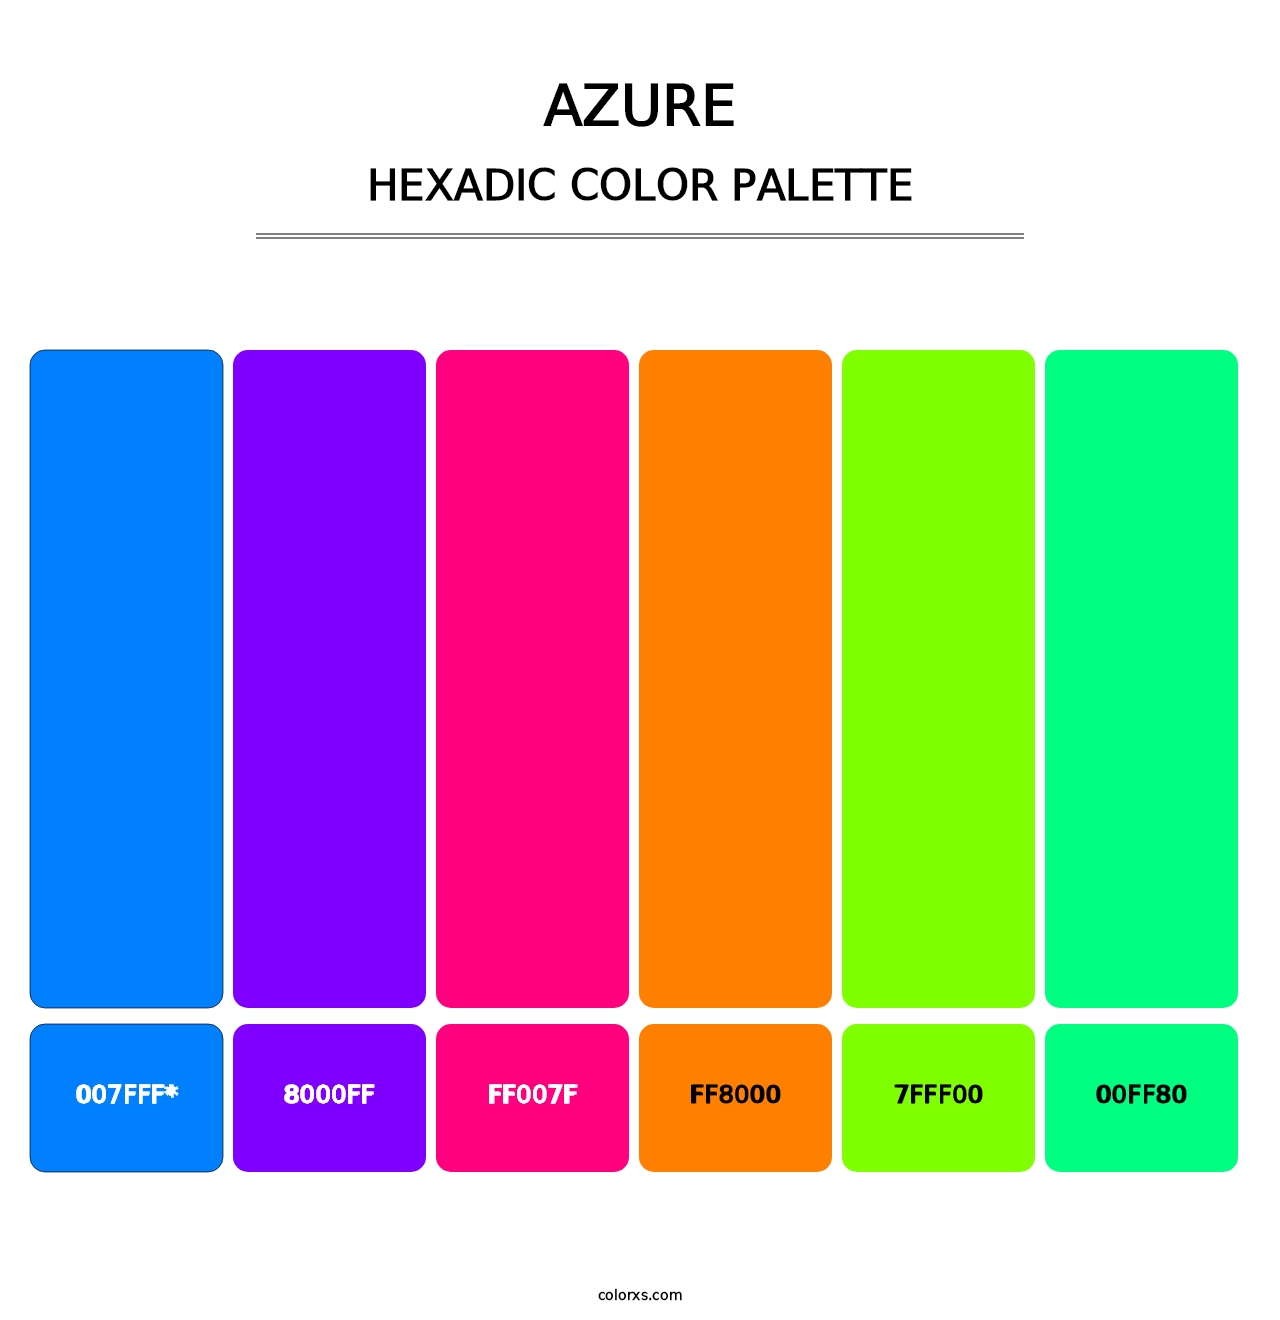 Azure - Hexadic Color Palette